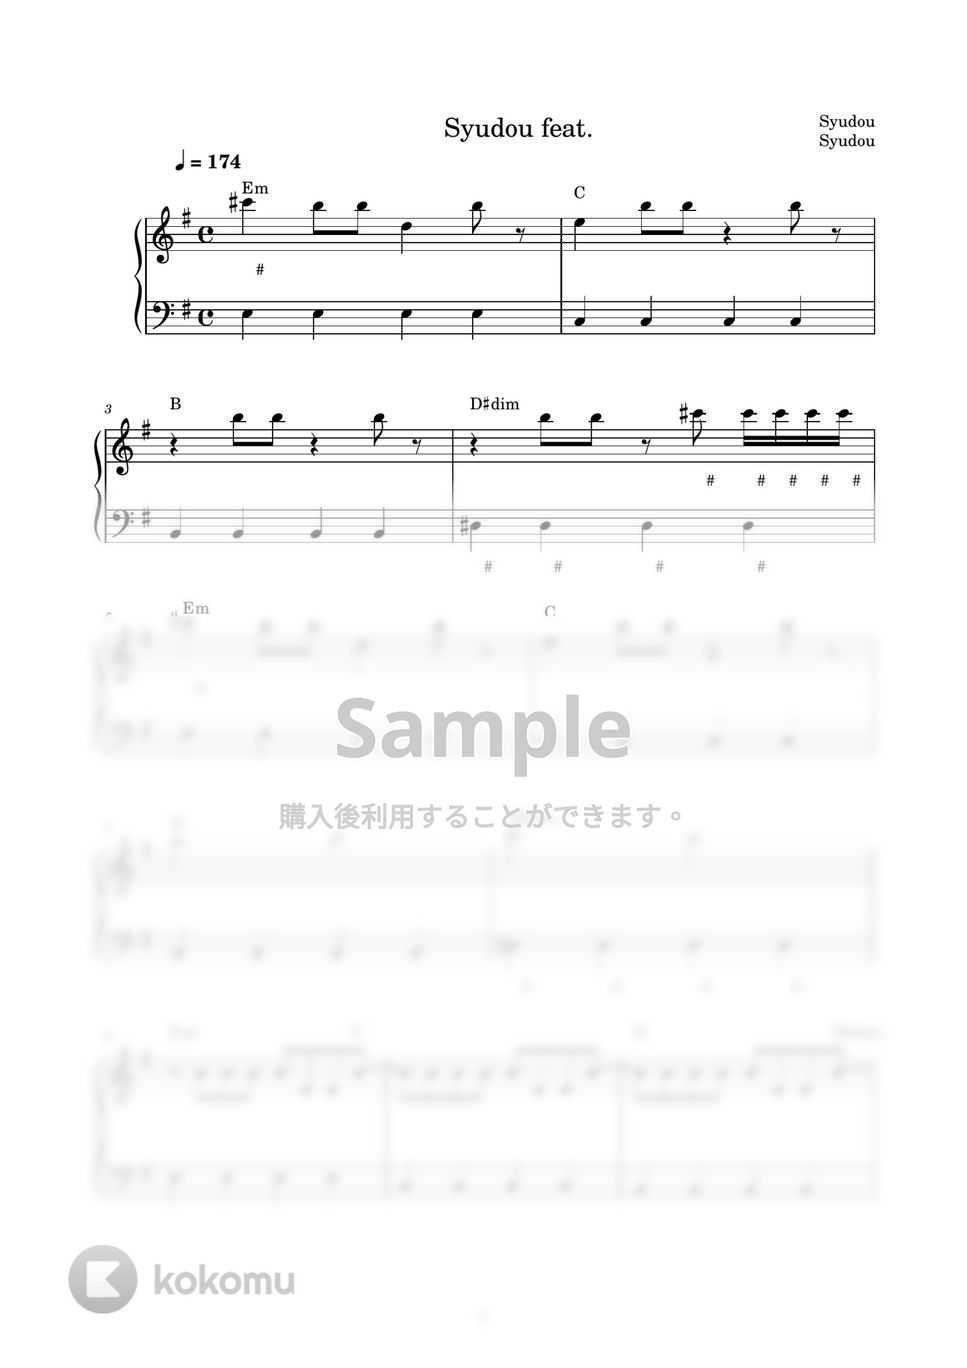 Syudou feat.初音ミク - ビターチョコデコレーション (ピアノ楽譜 / かんたん両手 / 歌詞付き / ドレミ付き / 初心者向き) by piano.tokyo